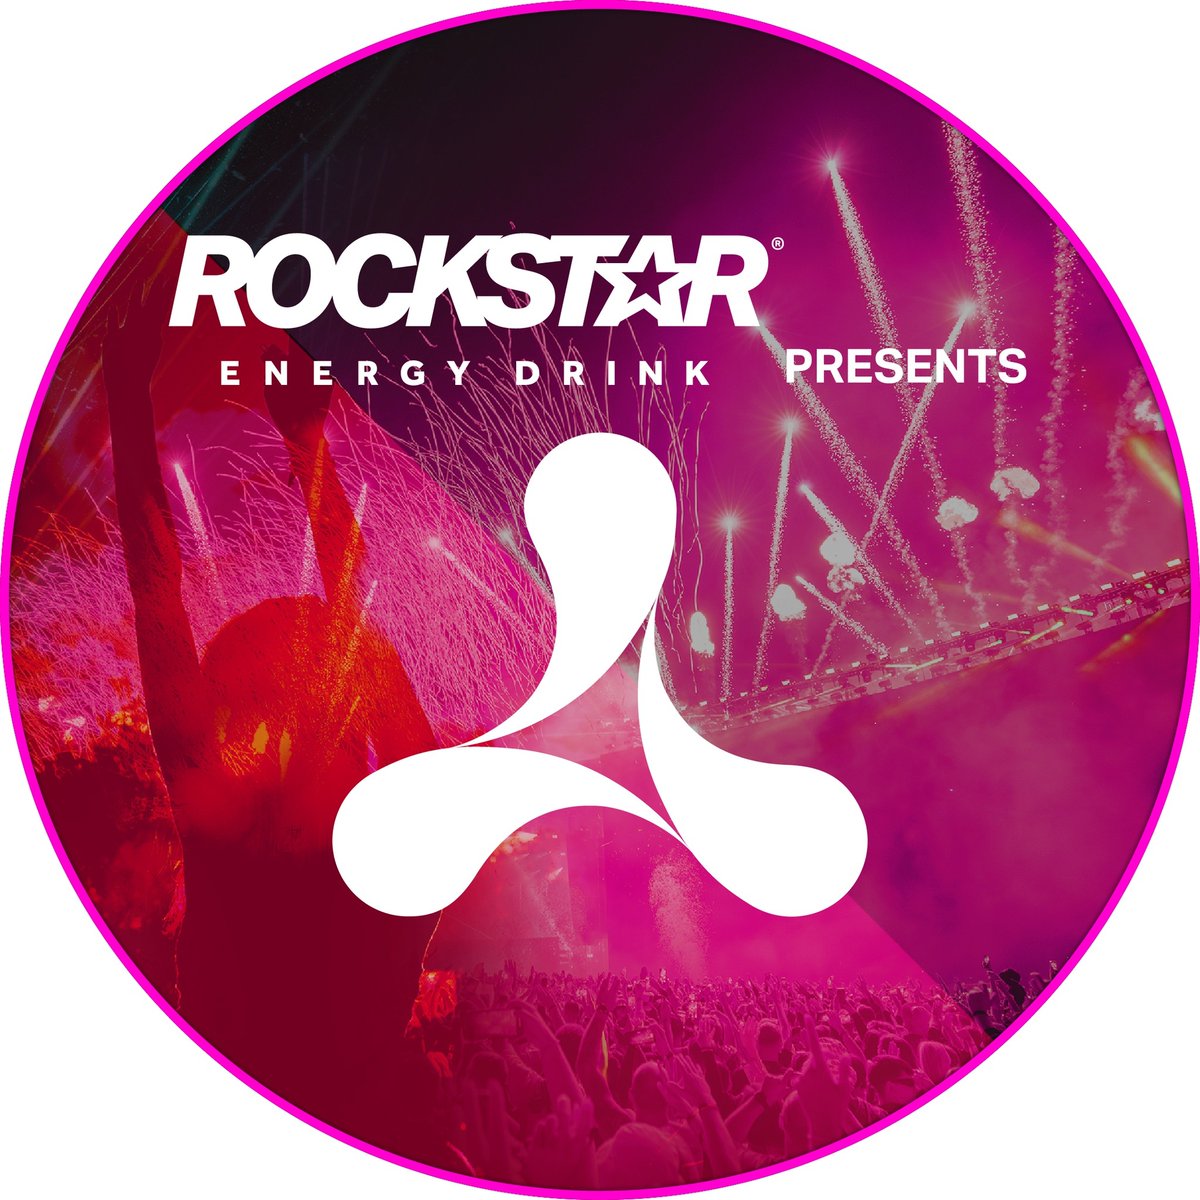 .@Creamfields change de nom et devient 'Rockstar Energy presents Creamfields' 👀